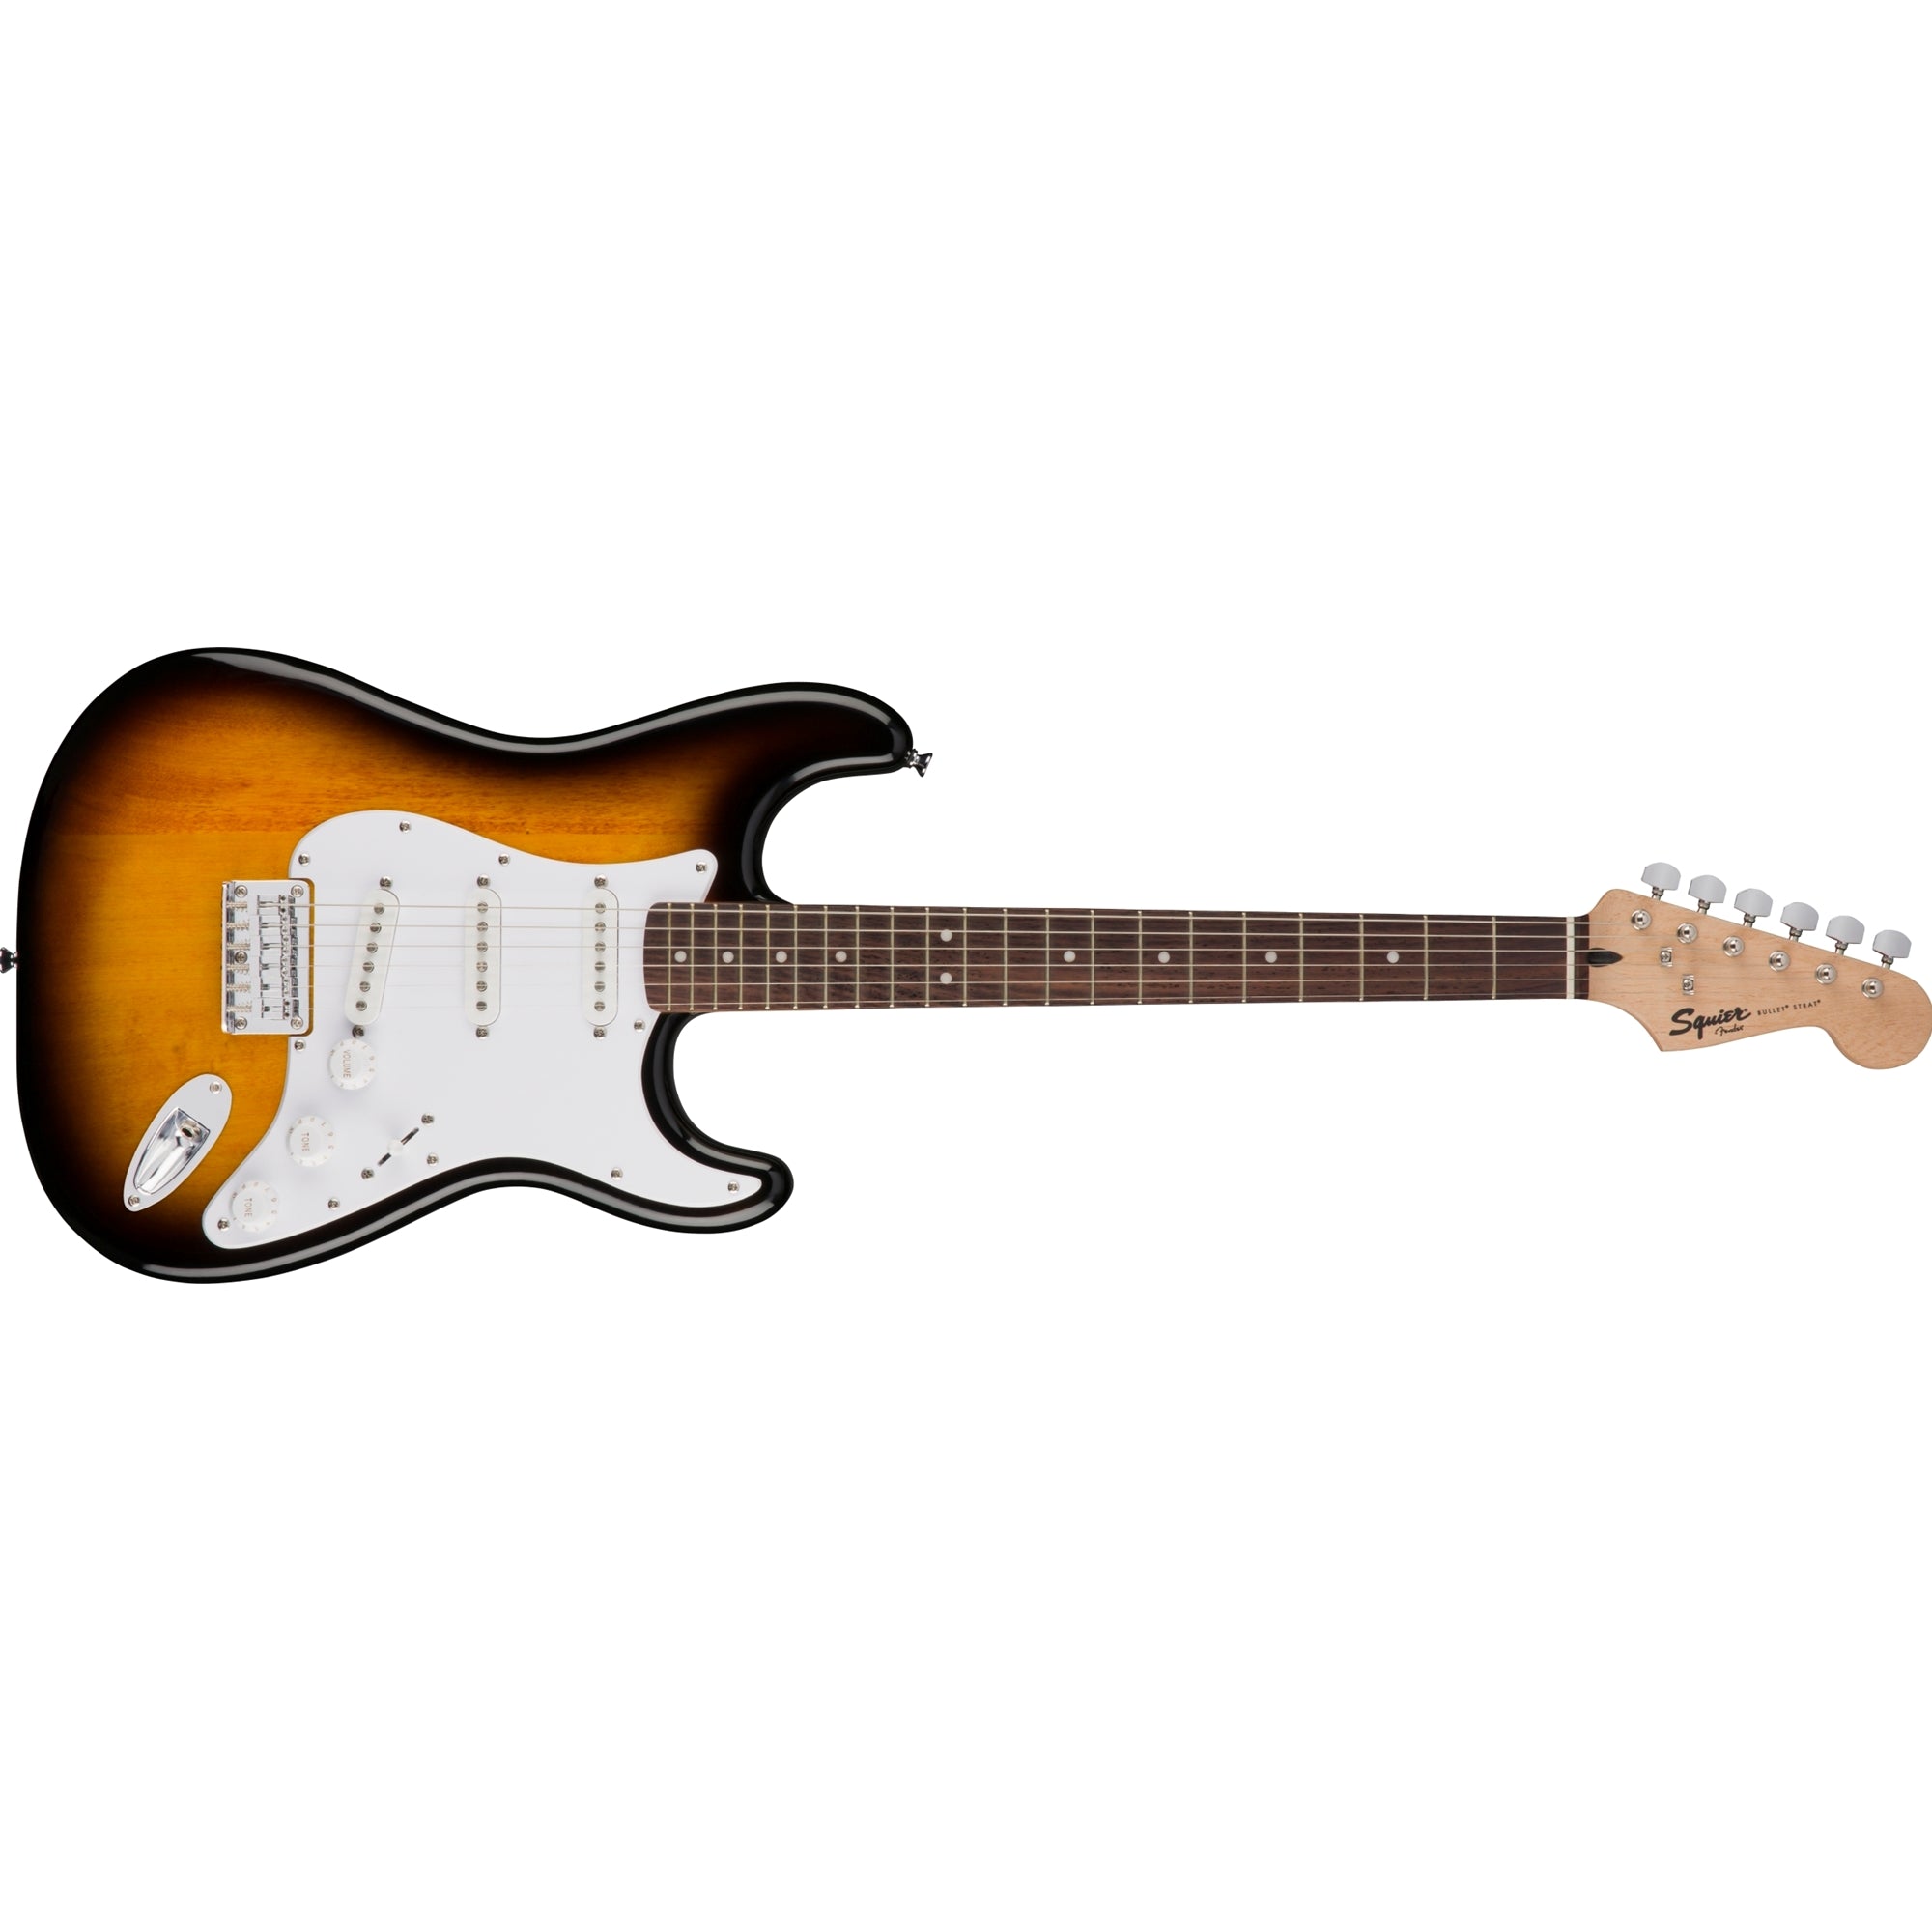 FENDER #0371001532 Squier Bullet Stratocaster HT Electric Guitar (Brown Sunburst)